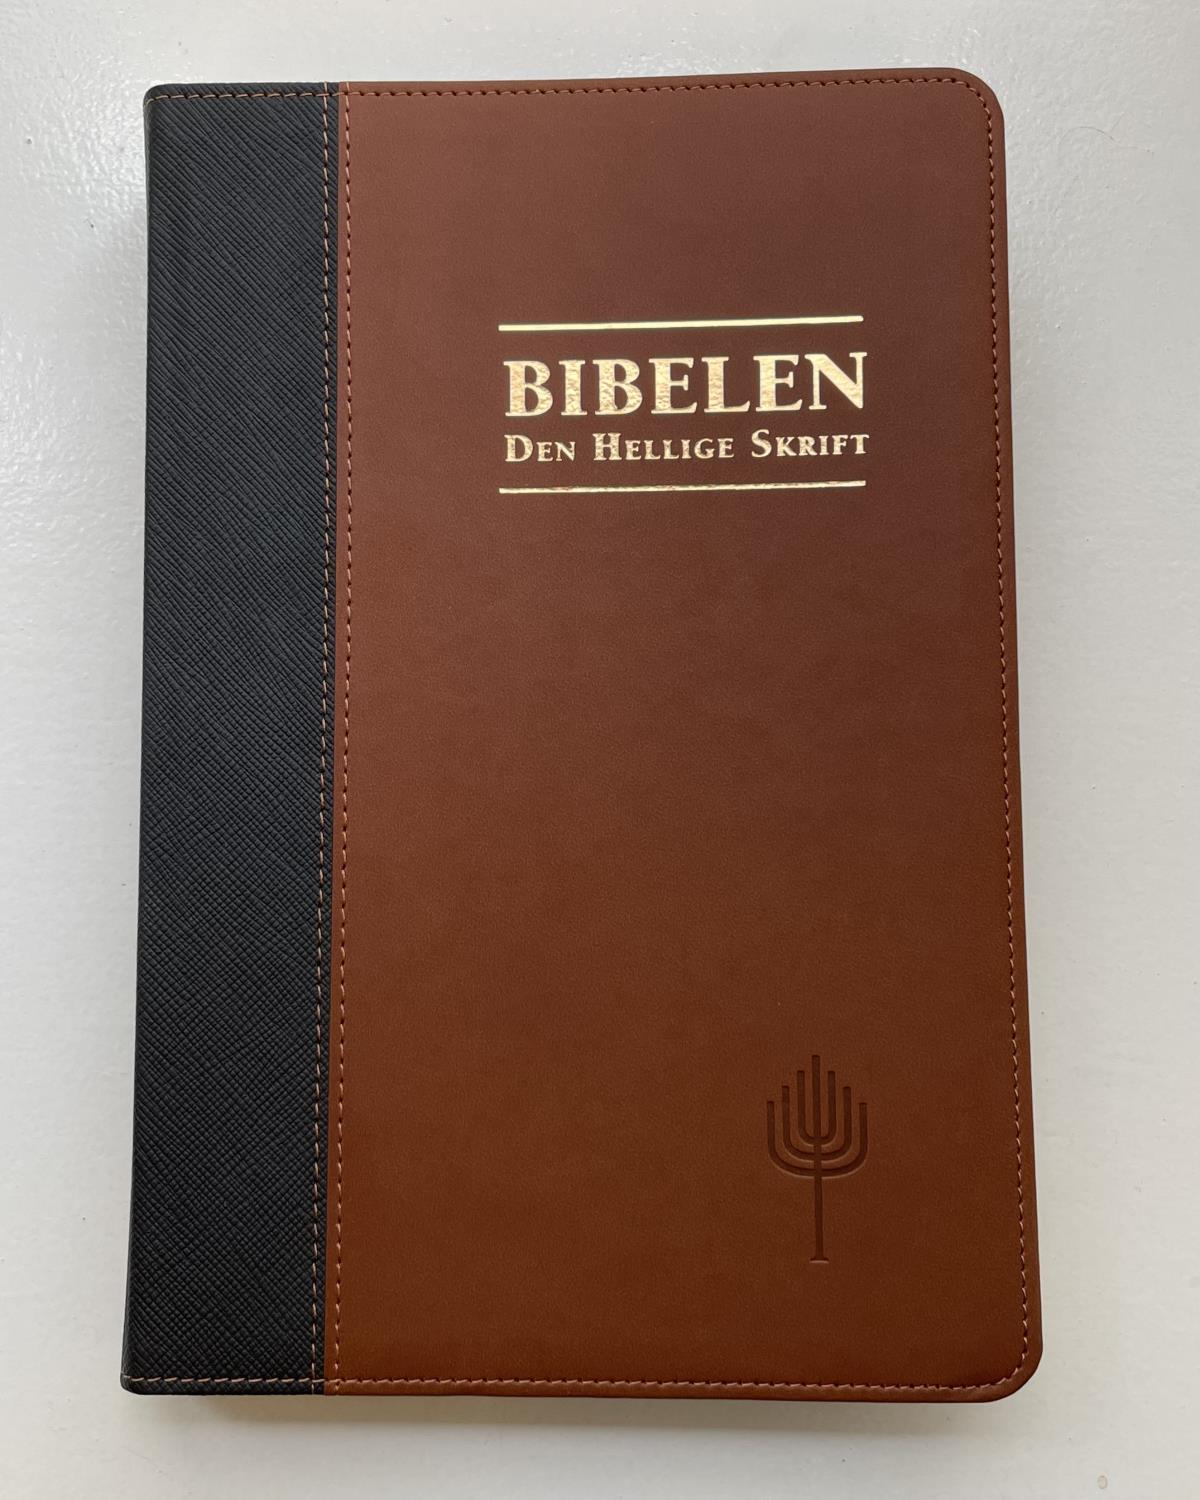 Bibelen - Den hellige skrift